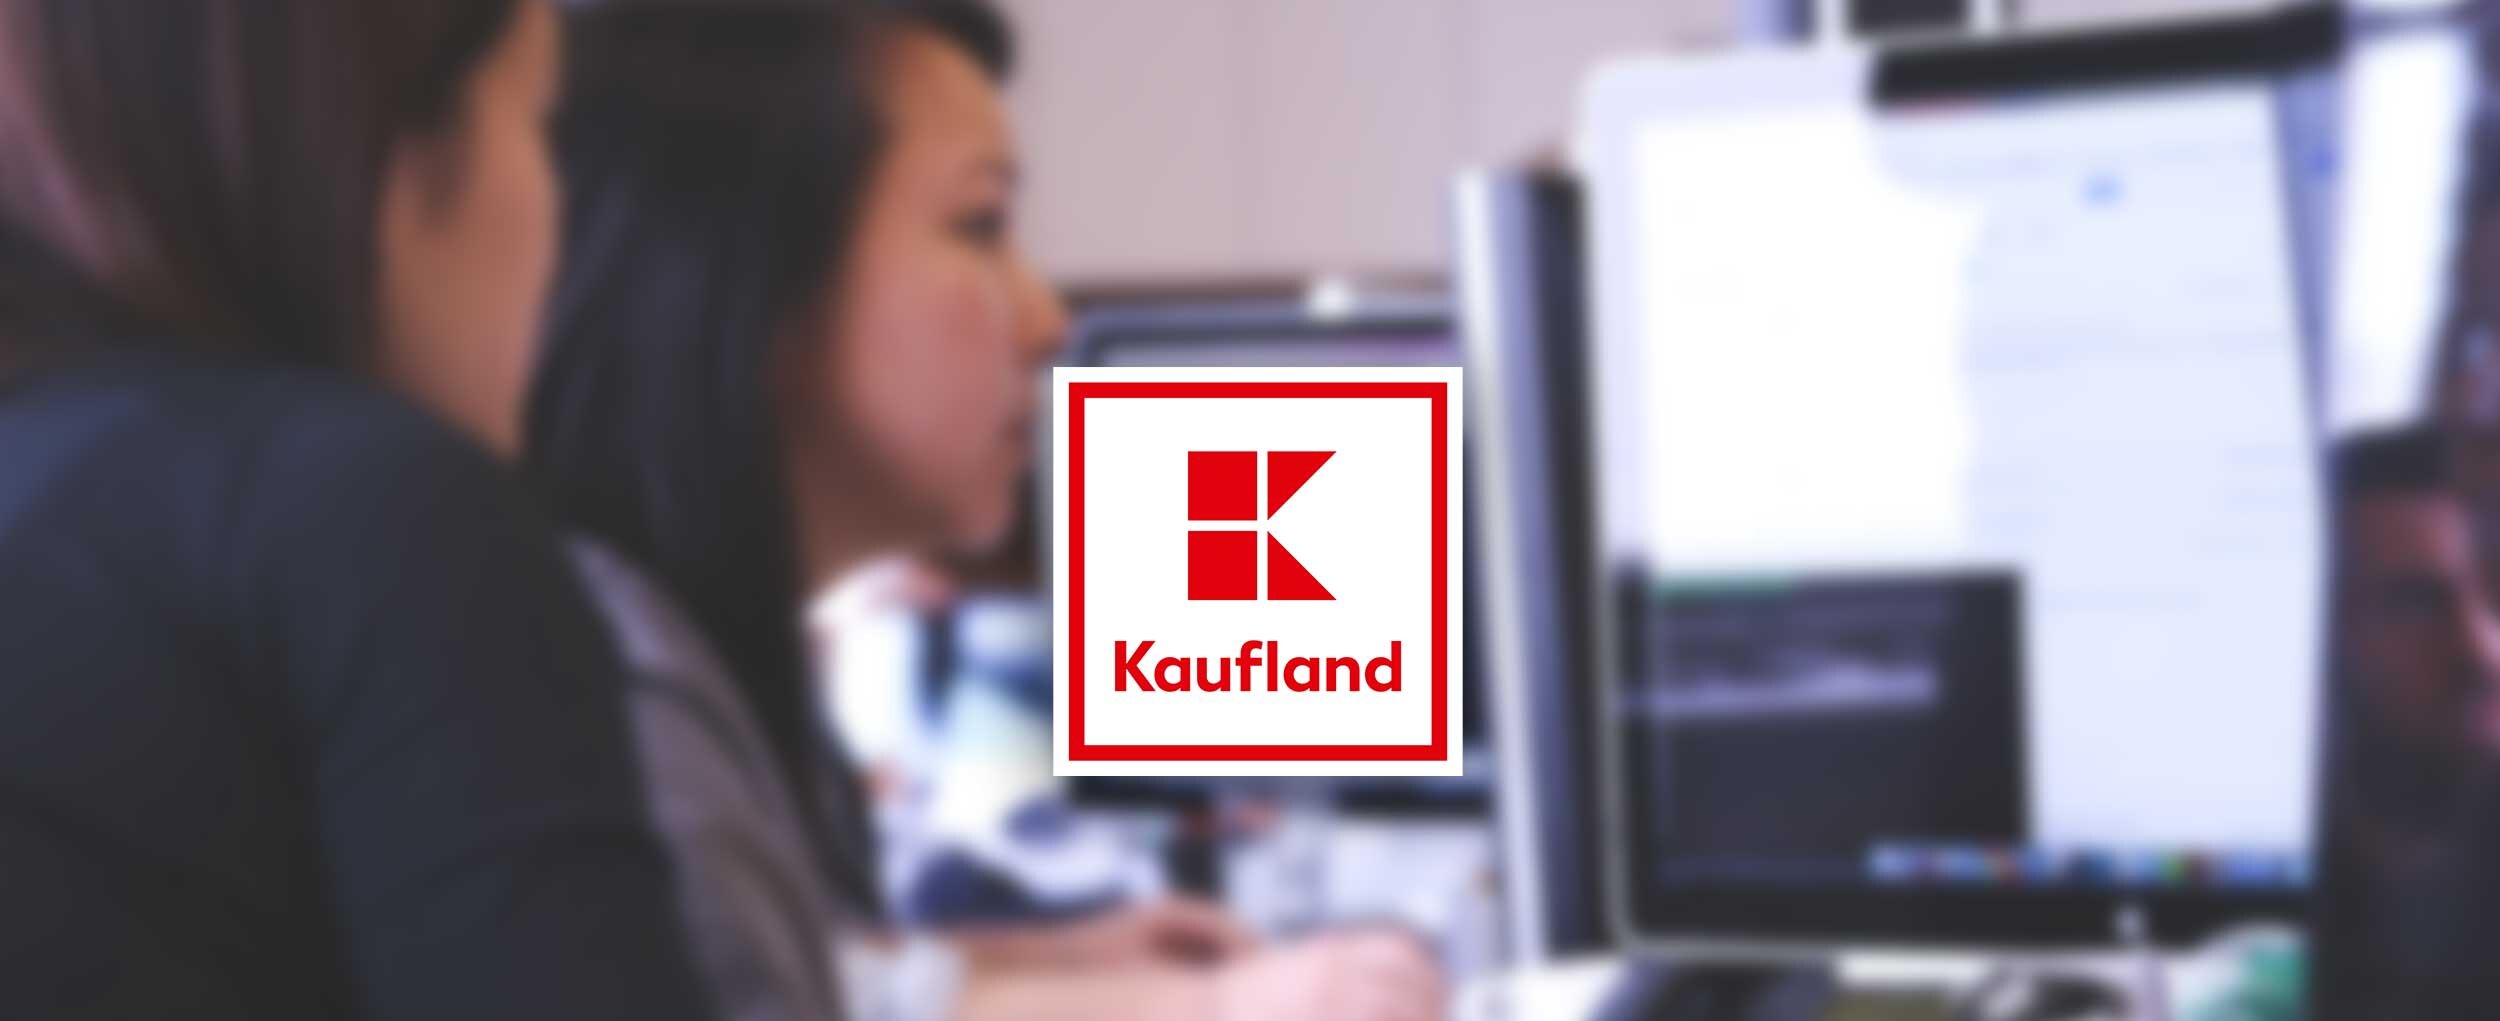 Kaufland | Community Management